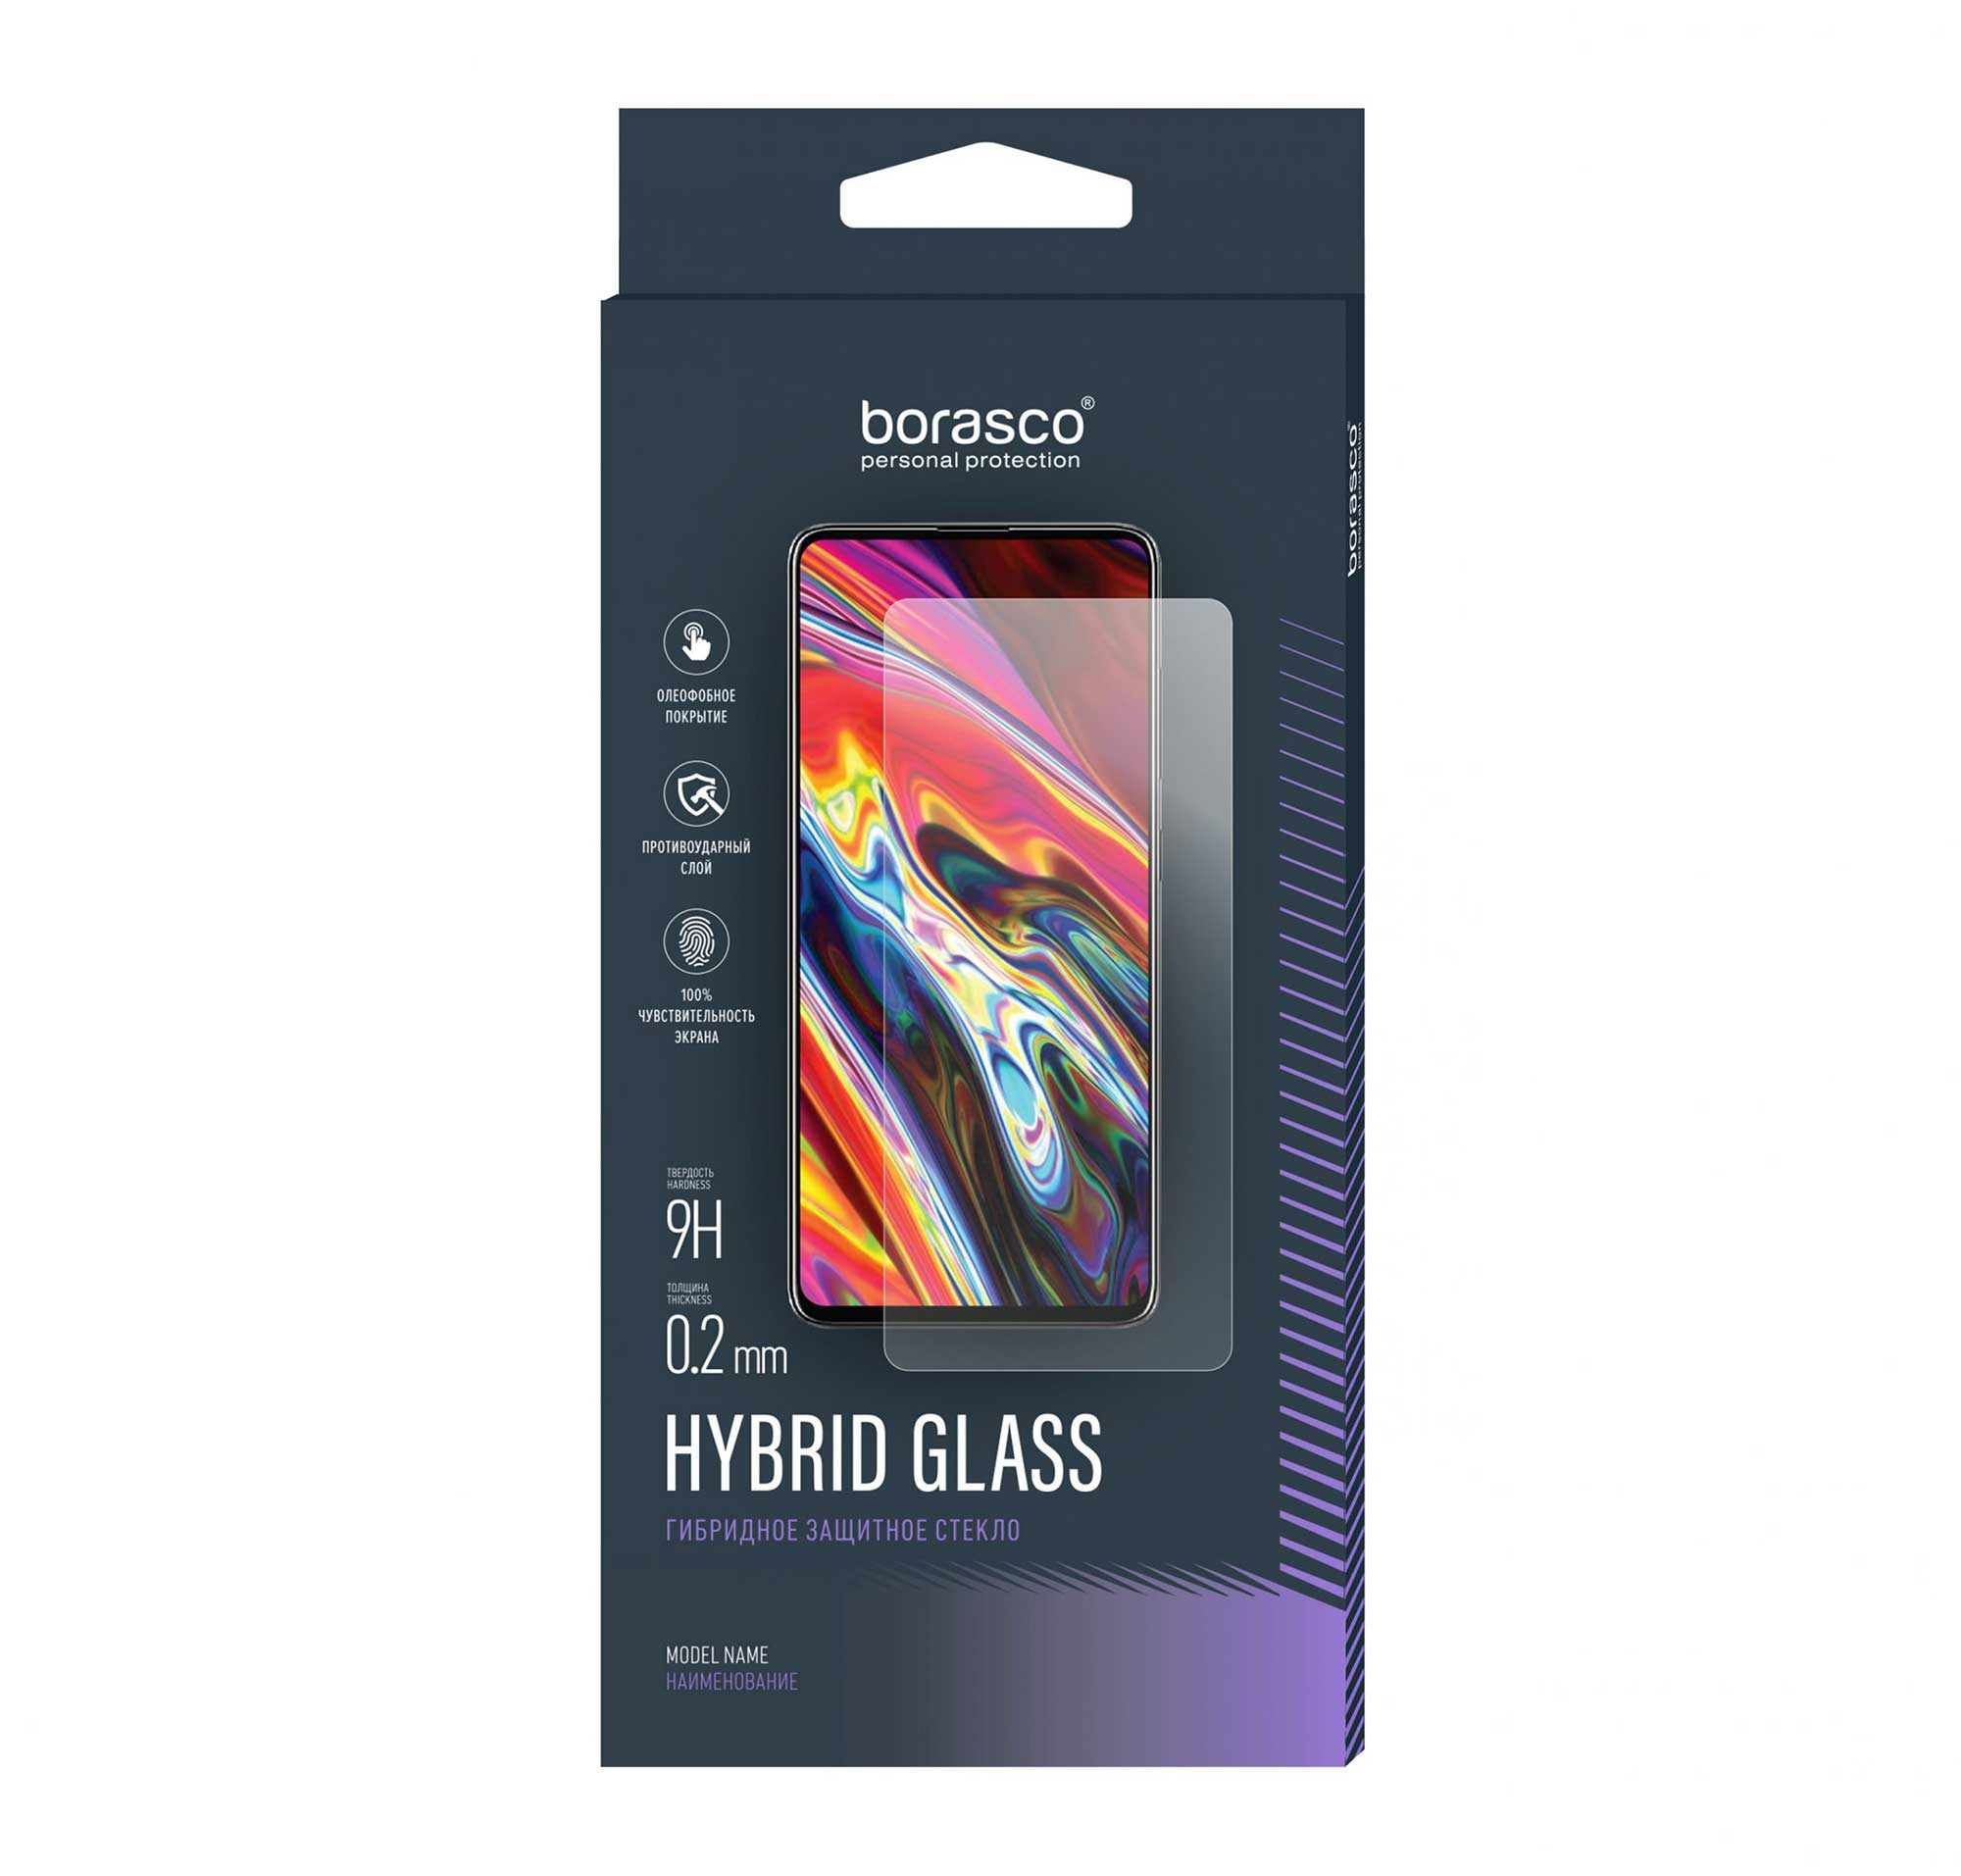 Защитное стекло Hybrid Glass для Nokia 1.4 защитное стекло interstep nokia 3 4 5 4